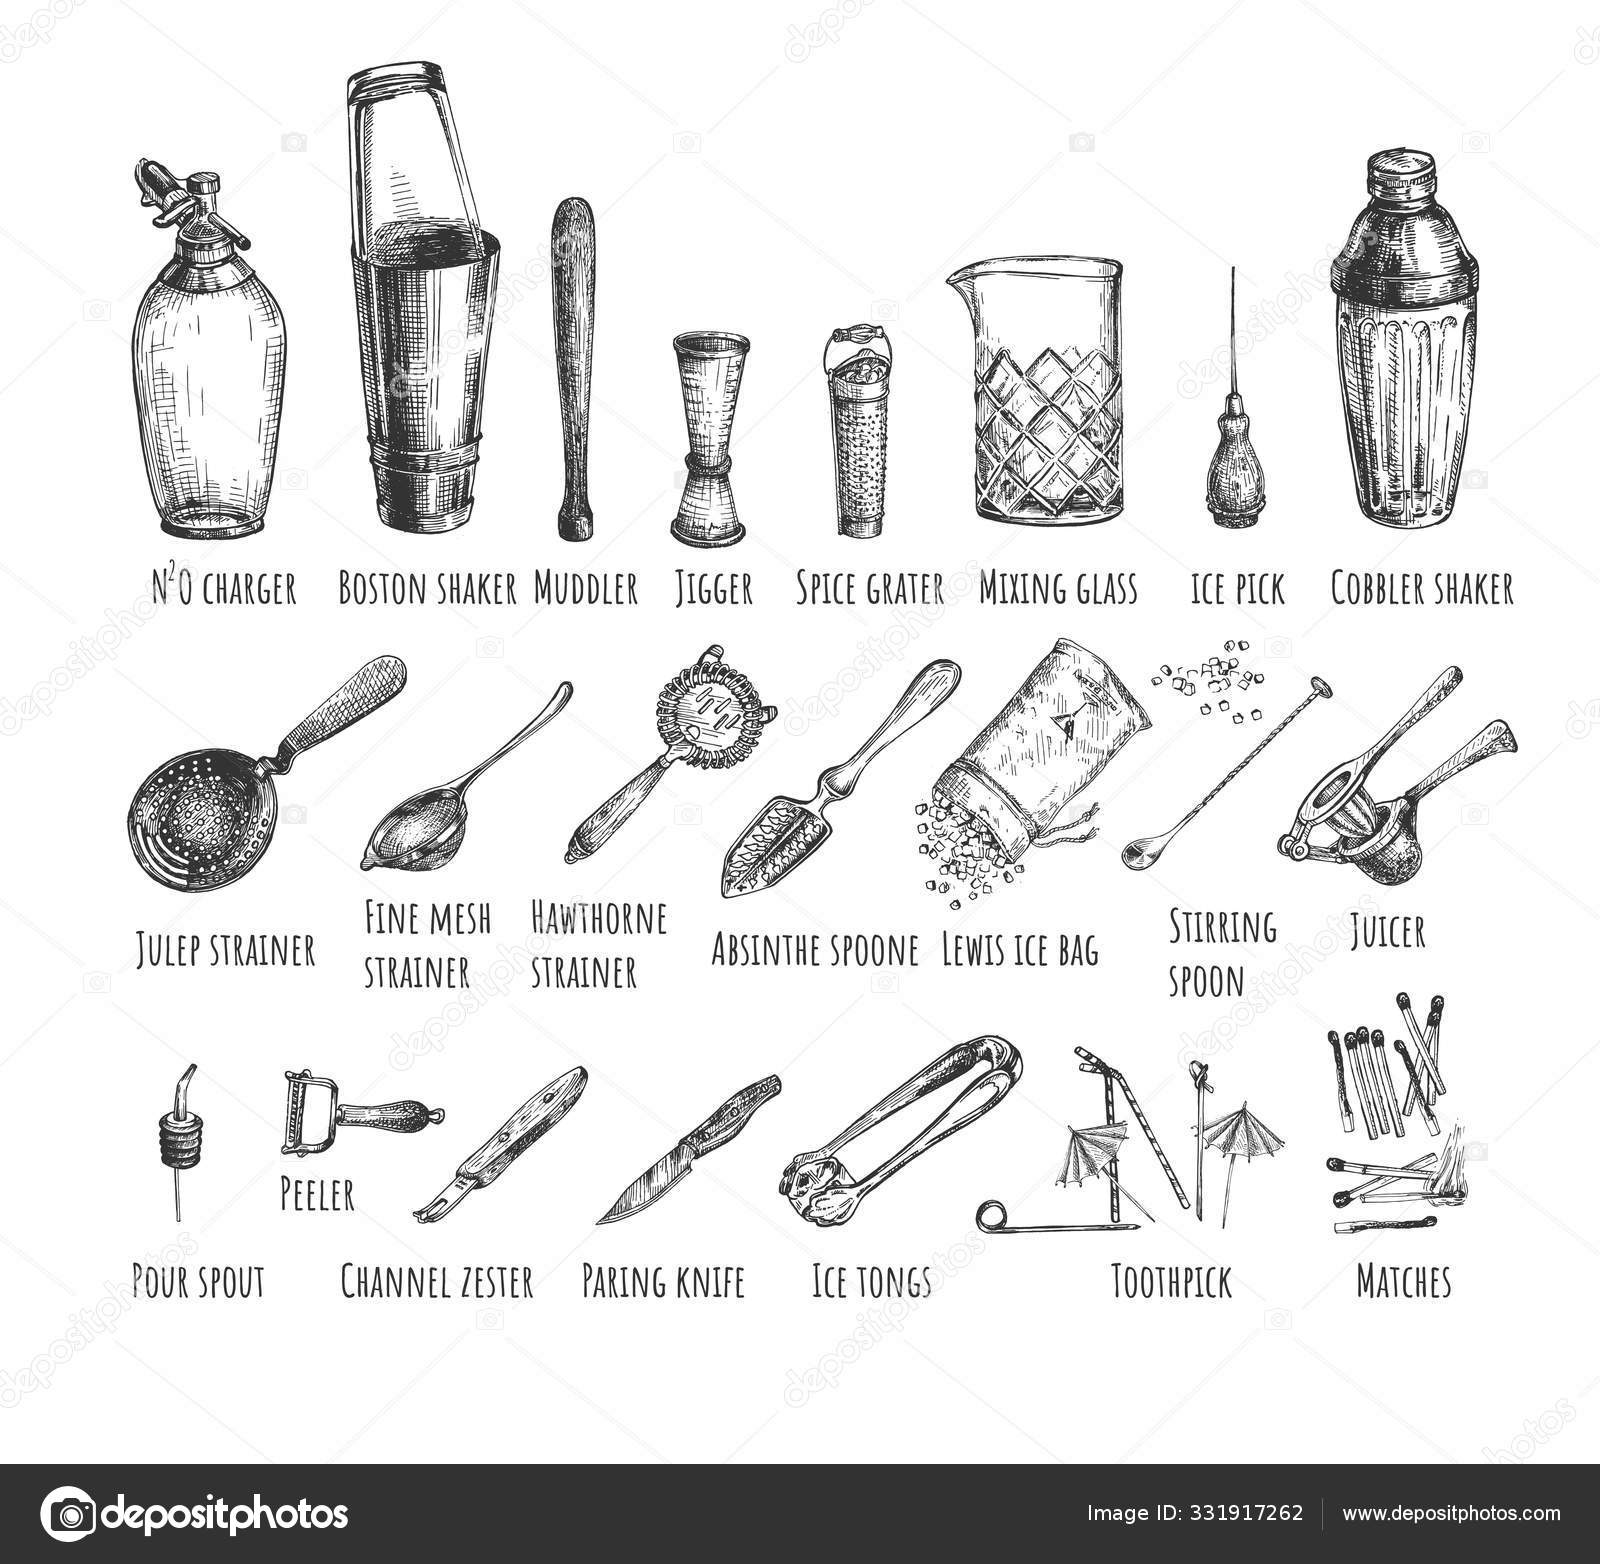 https://st3.depositphotos.com/3164303/33191/v/1600/depositphotos_331917262-stock-illustration-set-bartender-equipment-and-tools.jpg